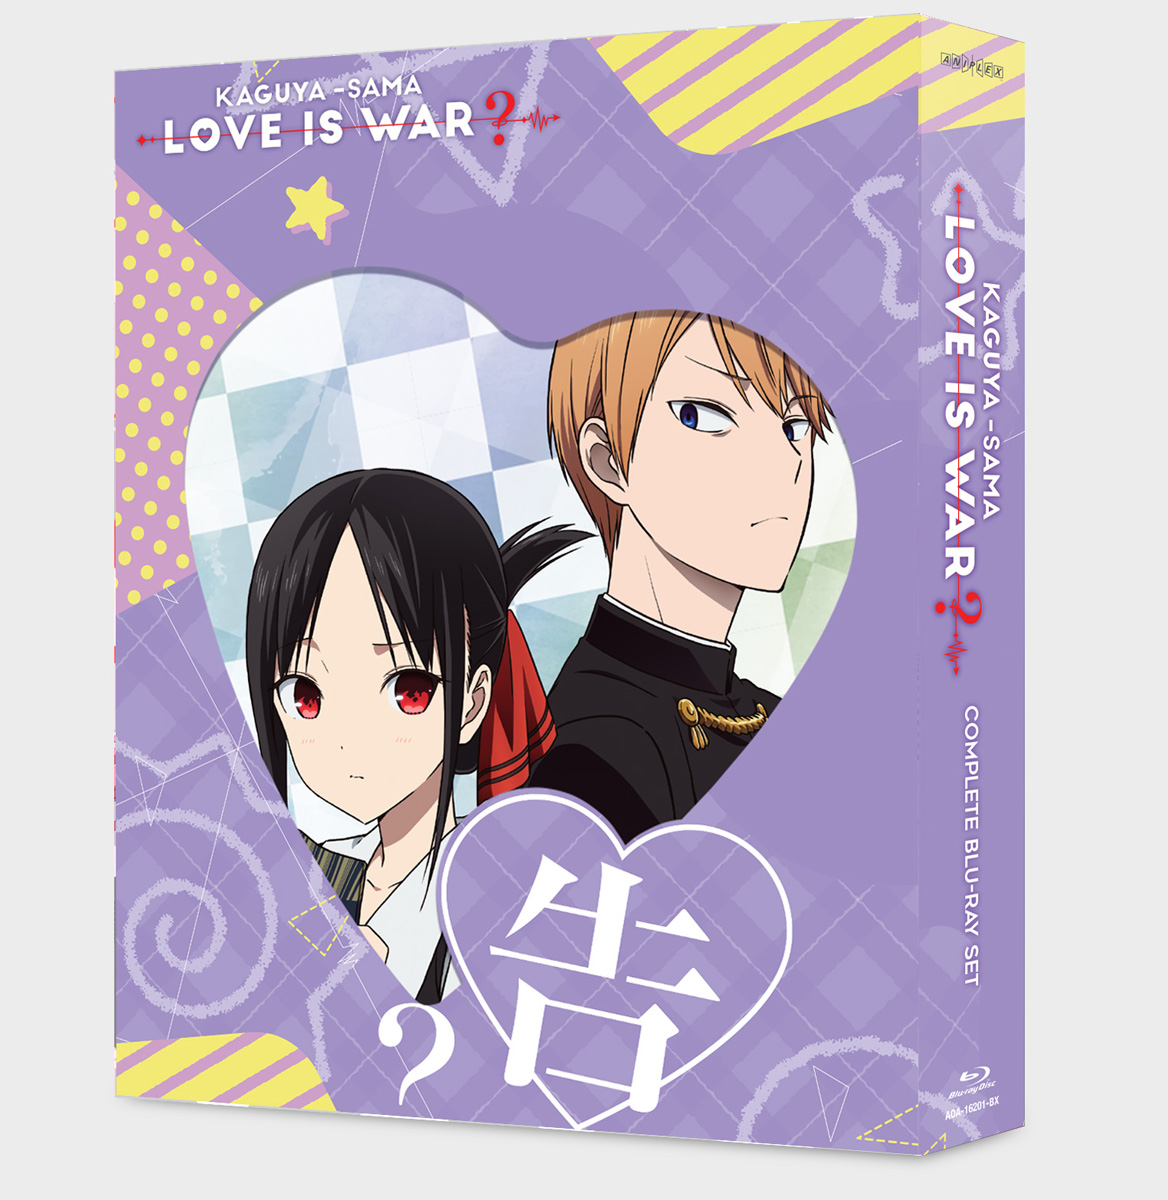 Kaguya sama Love Is War 2nd Season Vol.4 Limited Edition Blu-ray Japan  Version